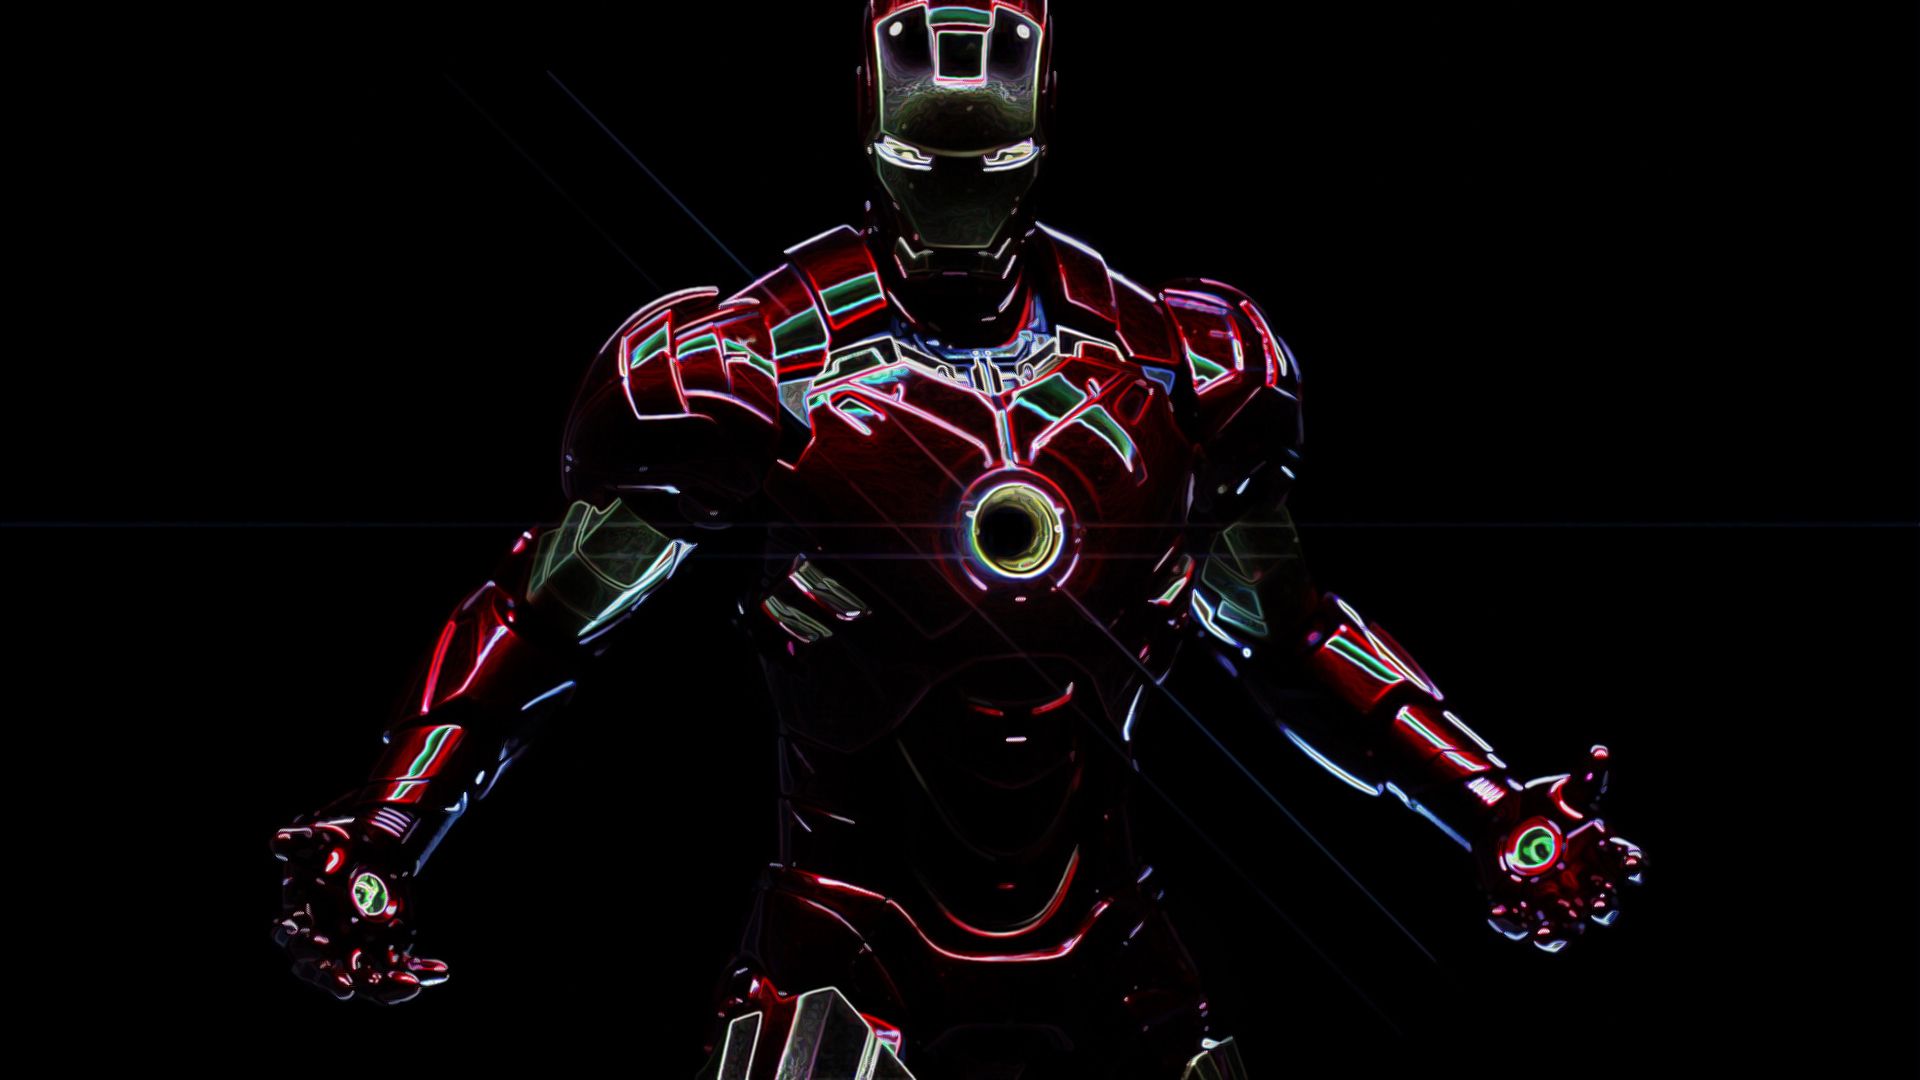 Iron Man Wallpaper Designs 4455 - HD Wallpapers Site